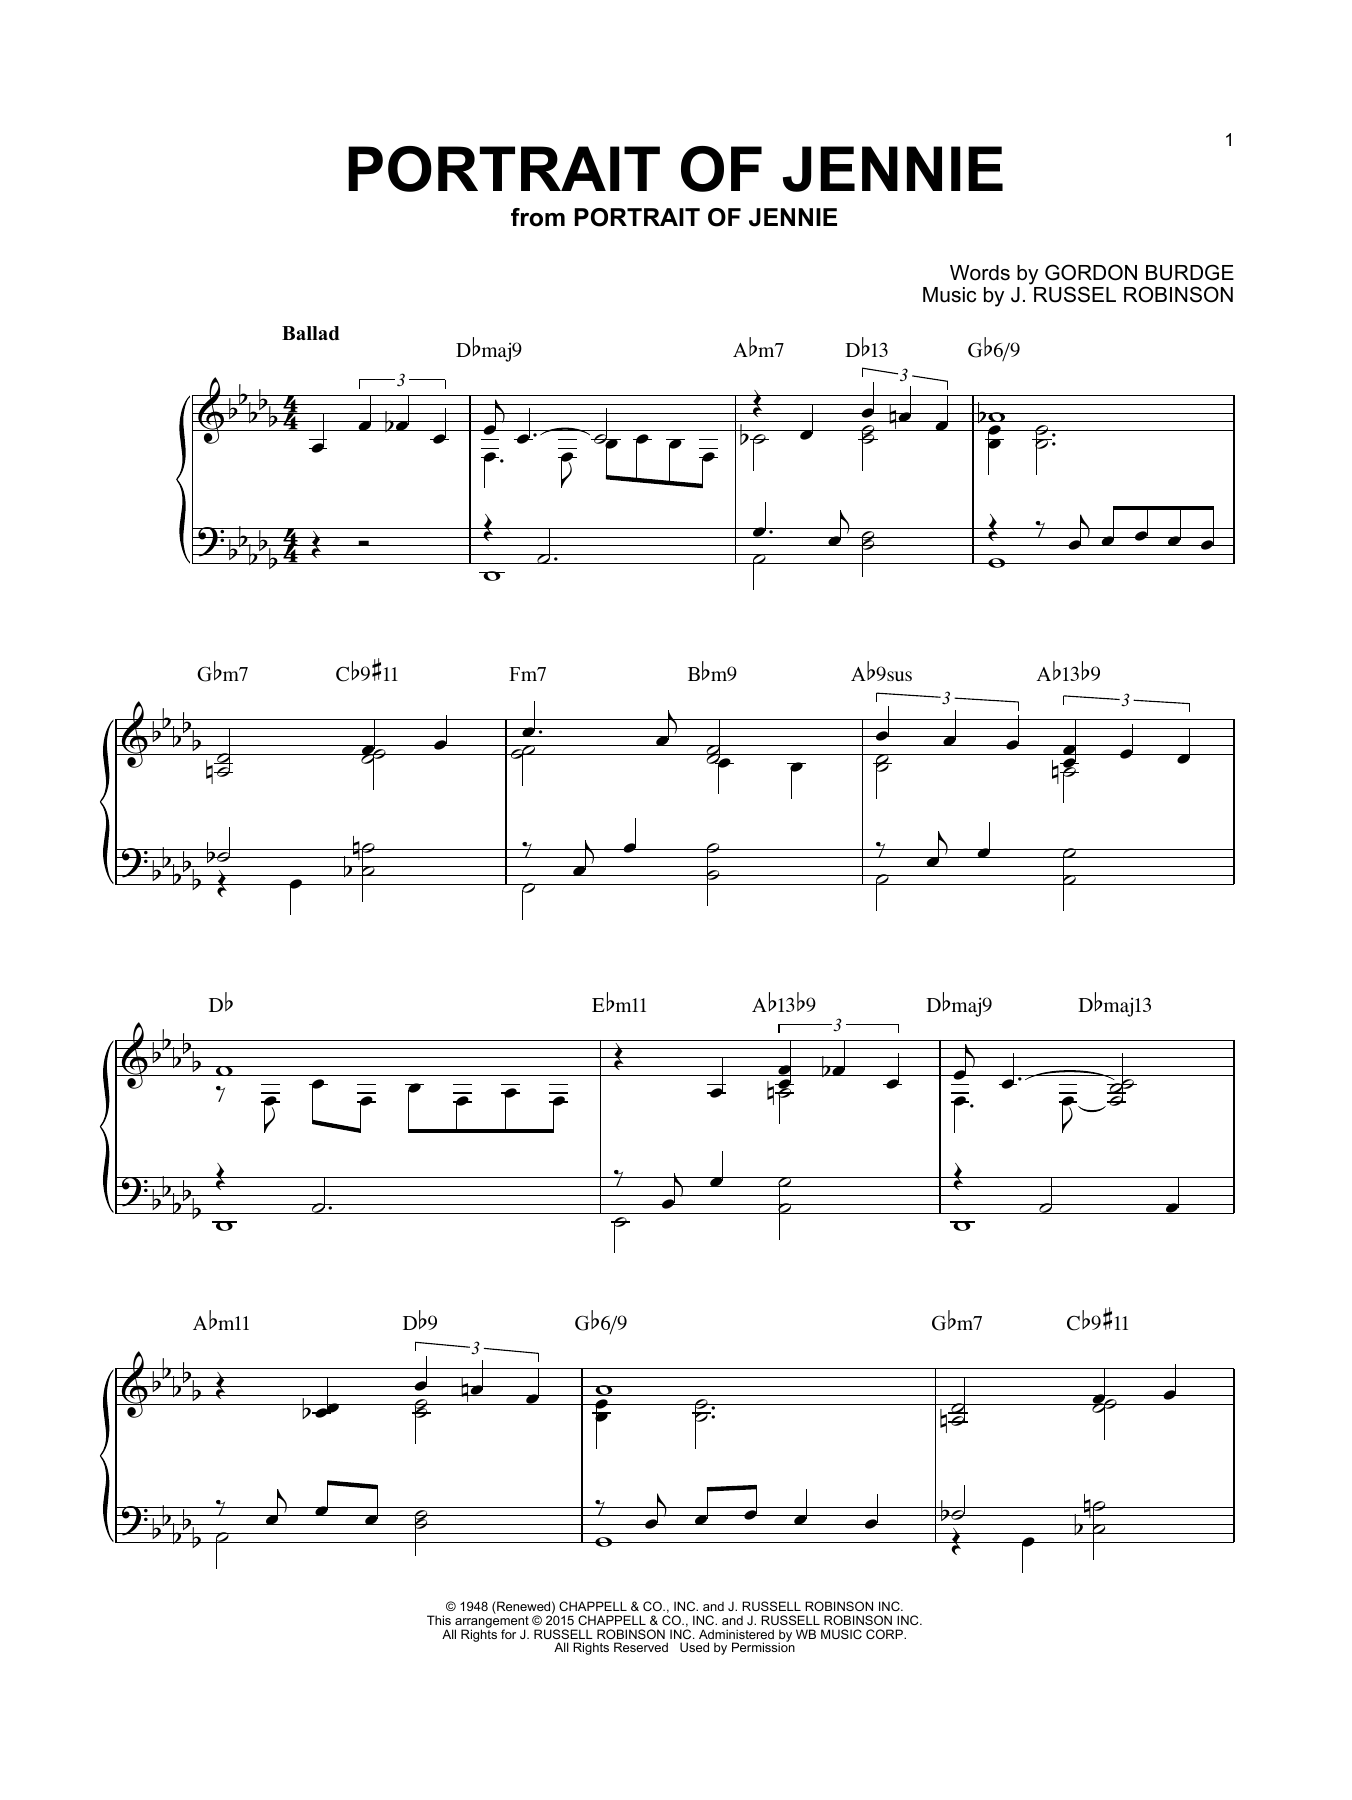 Gordon Burdge Portrait of Jennie [Jazz version] (arr. Brent Edstrom) Sheet Music Notes & Chords for Piano - Download or Print PDF